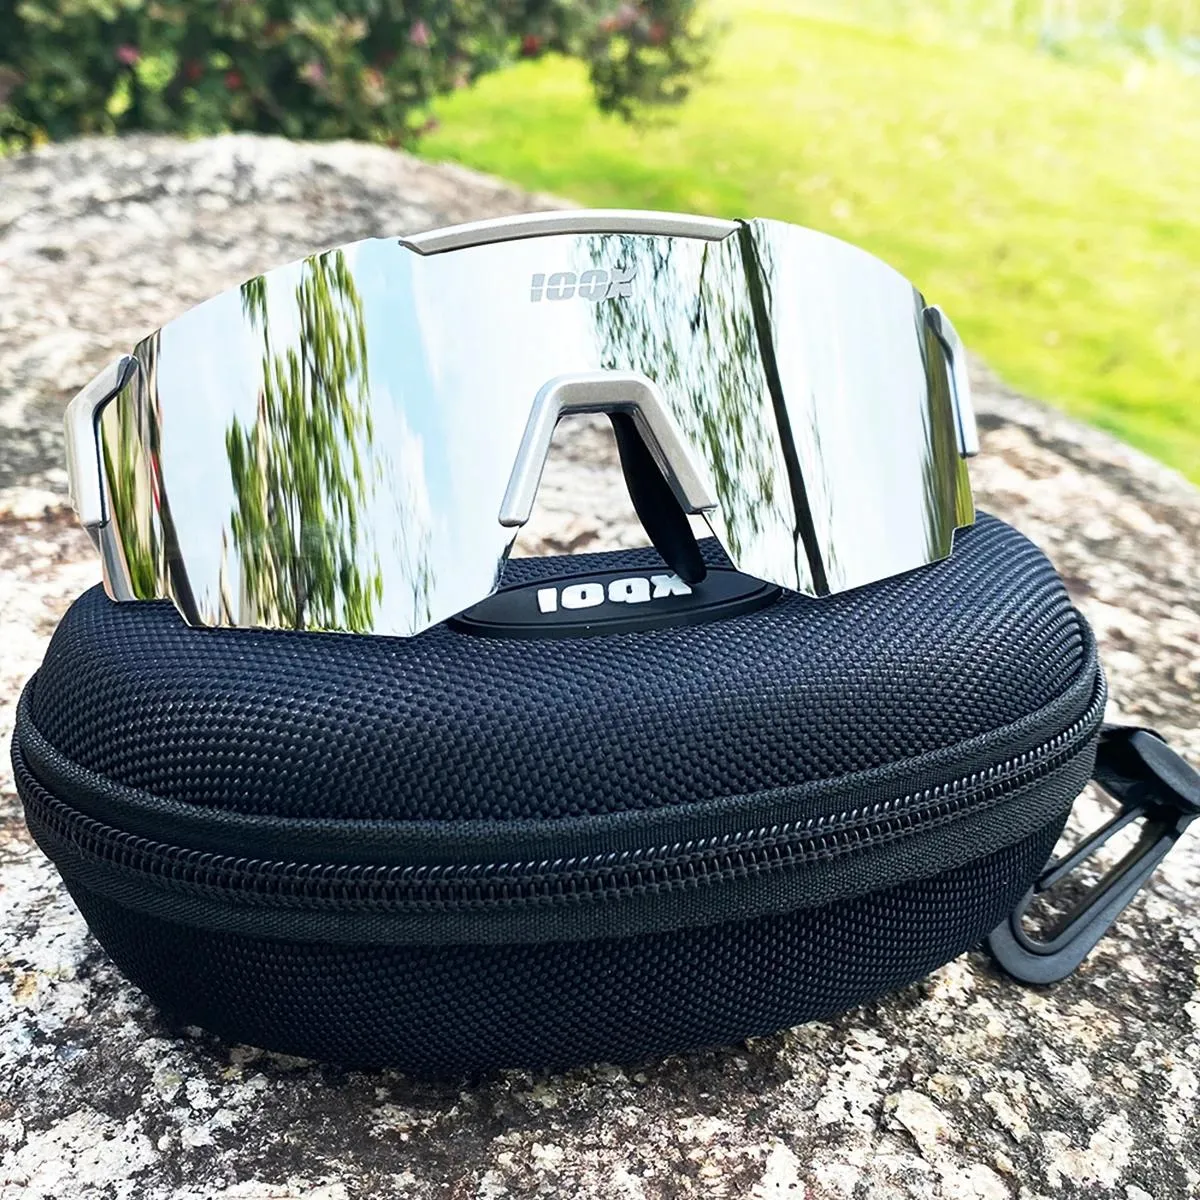 Eyewars 3 Lens Polarized Outdoor Sports Bike Bicycle Sunglasses Gafas Mtb Terres à vélo Eyewear Peter Goggles Eyeglass